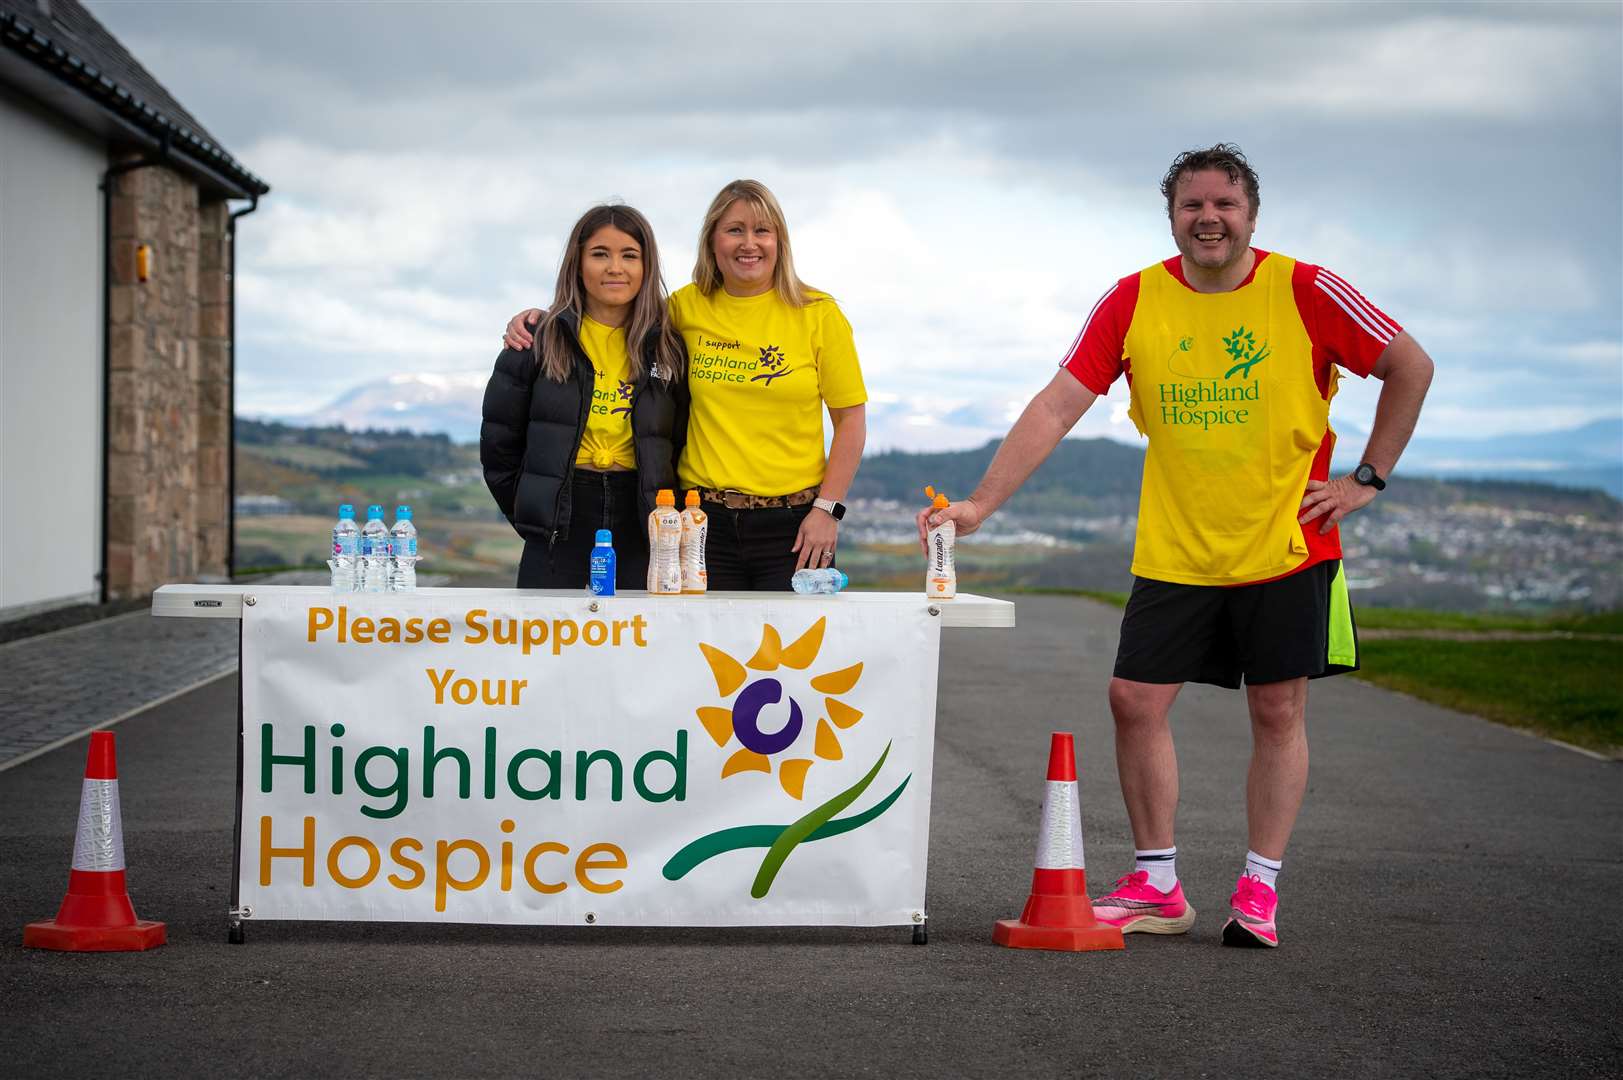 Iain McGilvray ran the London Marathon in his garden to raise money for Highland Hospice. Picture: Callum Mackay